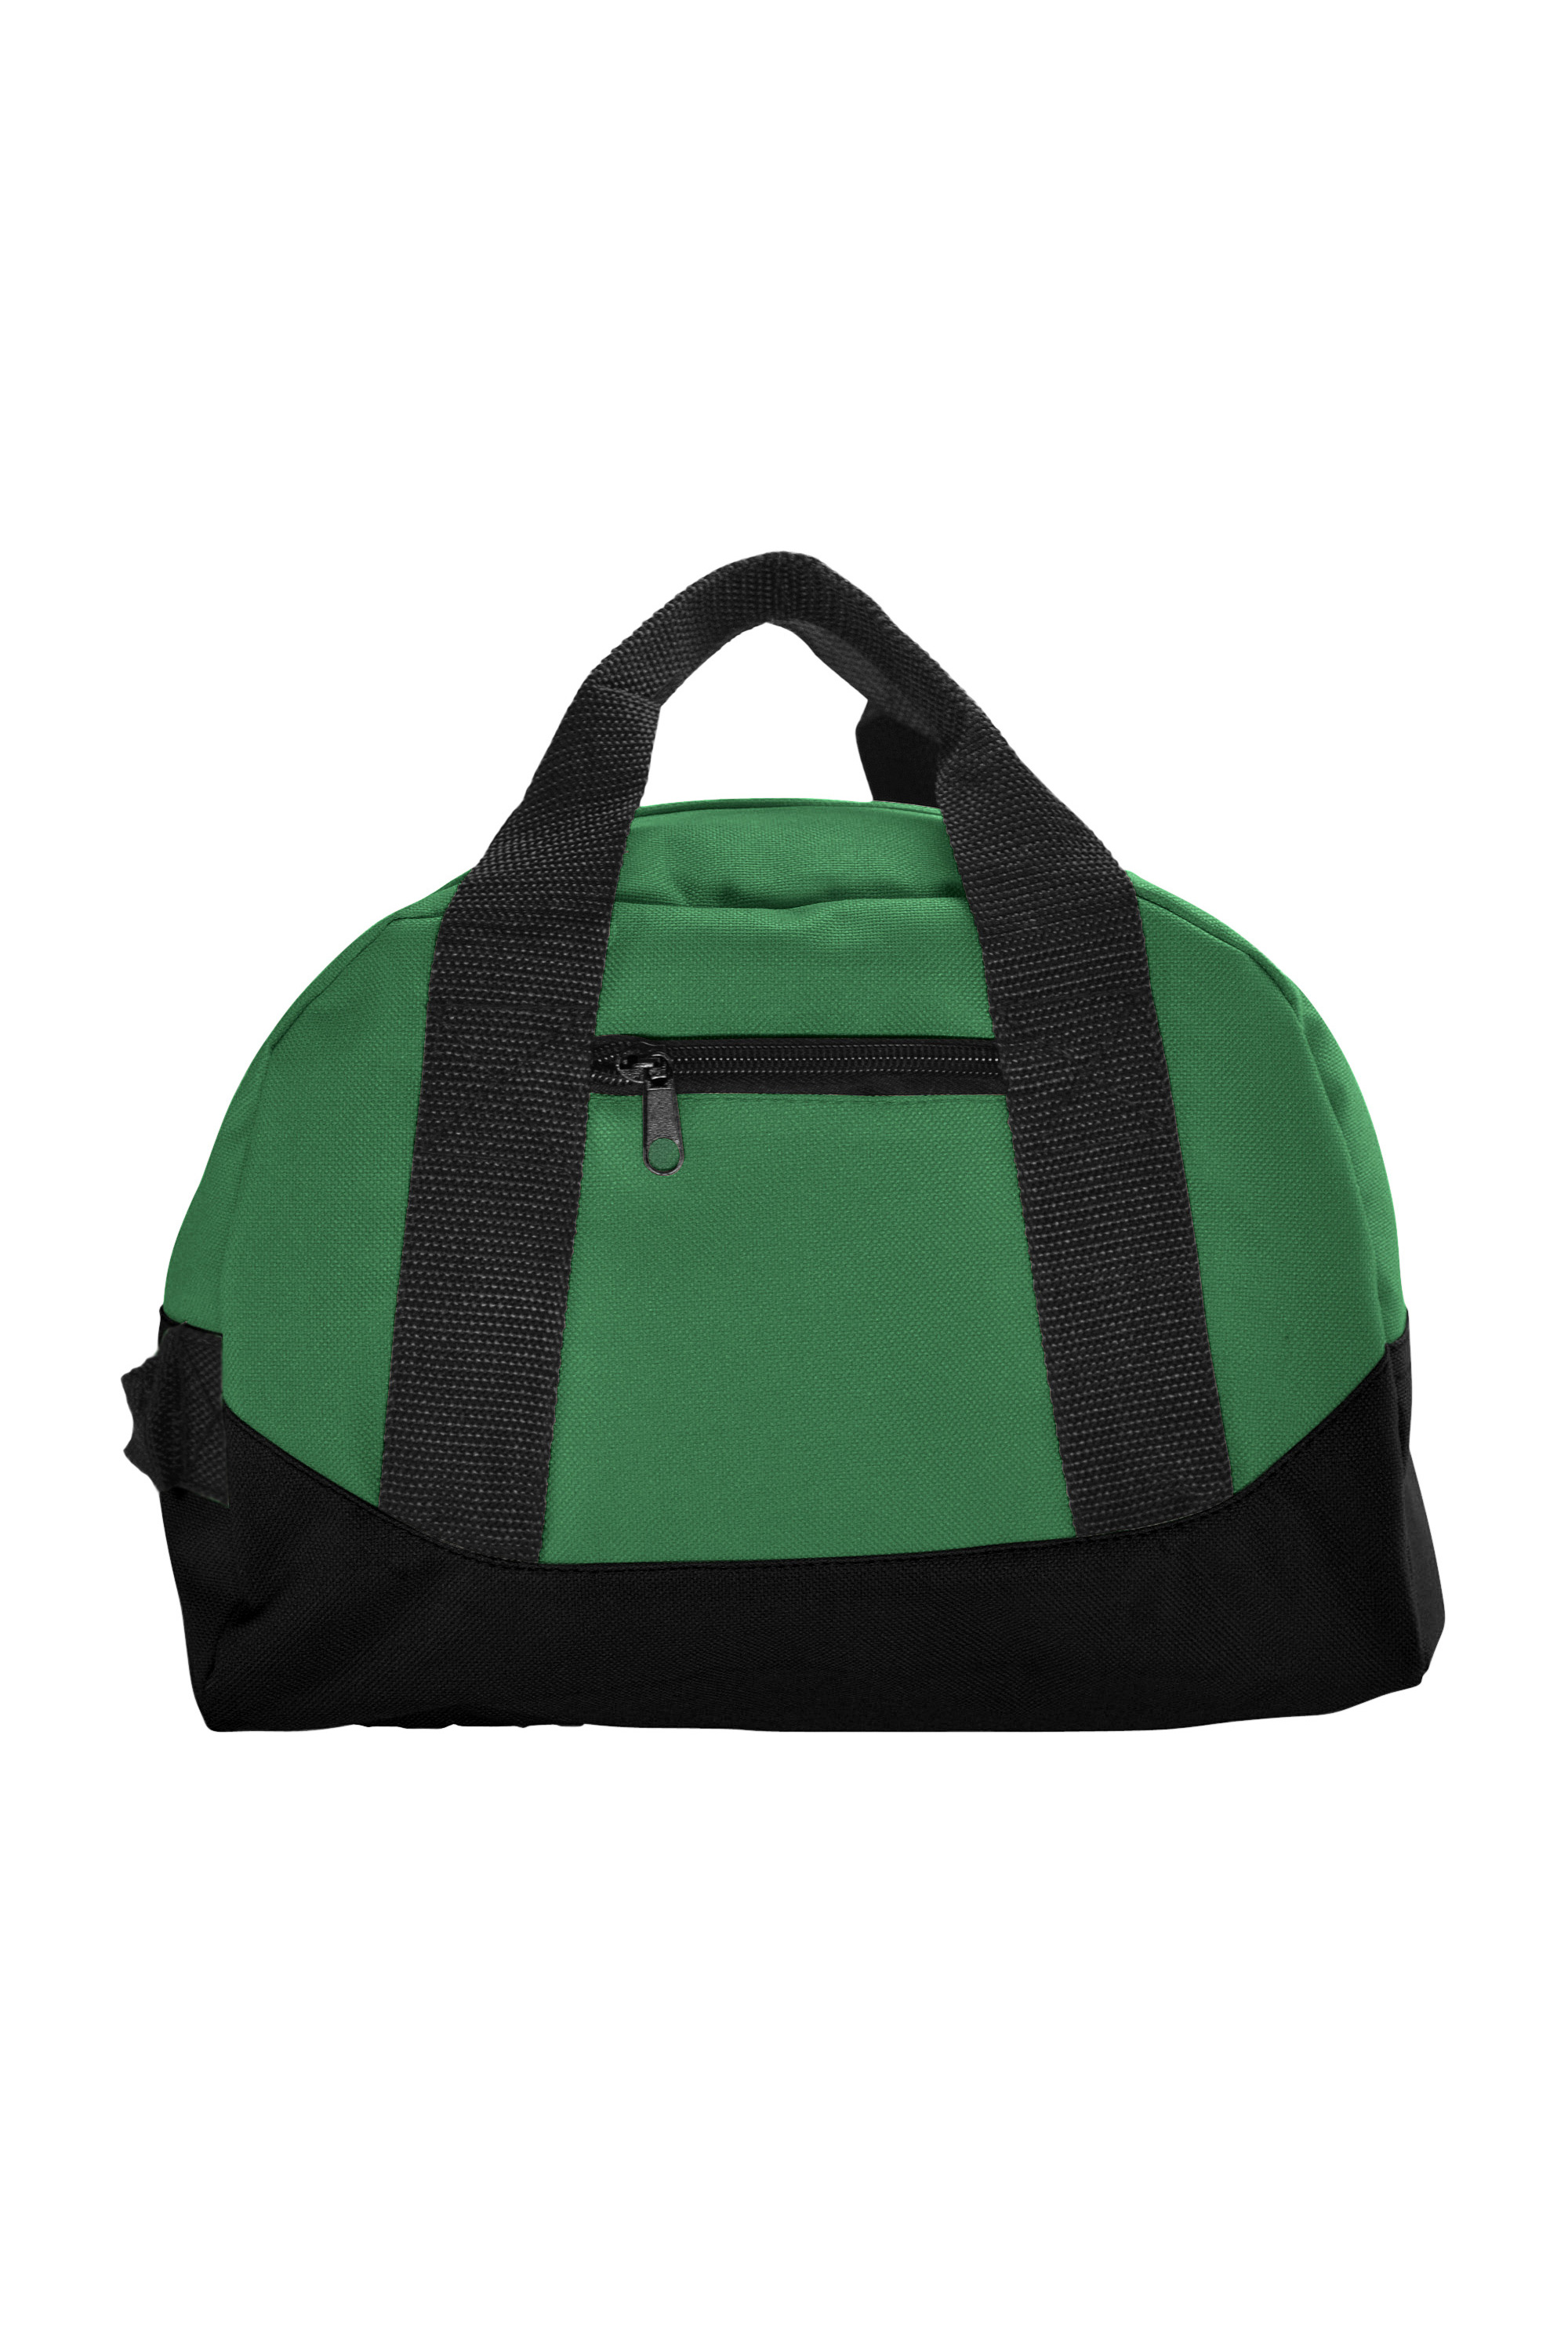 DALIX 12" Mini Two Tone Duffle Bag (Dark Green) - image 3 of 7